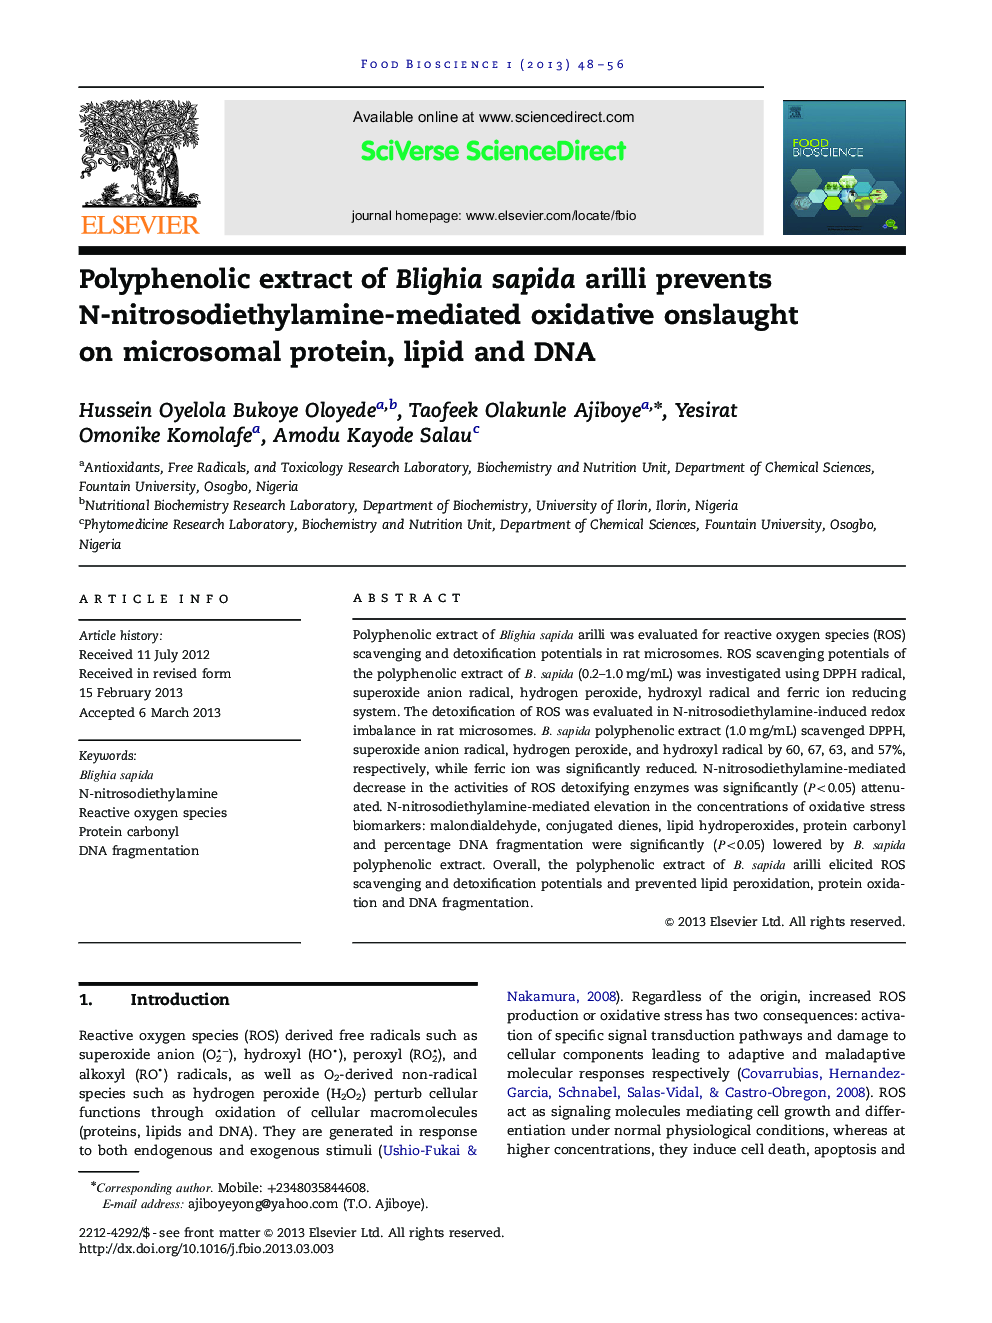 Polyphenolic extract of Blighia sapida arilli prevents N-nitrosodiethylamine-mediated oxidative onslaught on microsomal protein, lipid and DNA